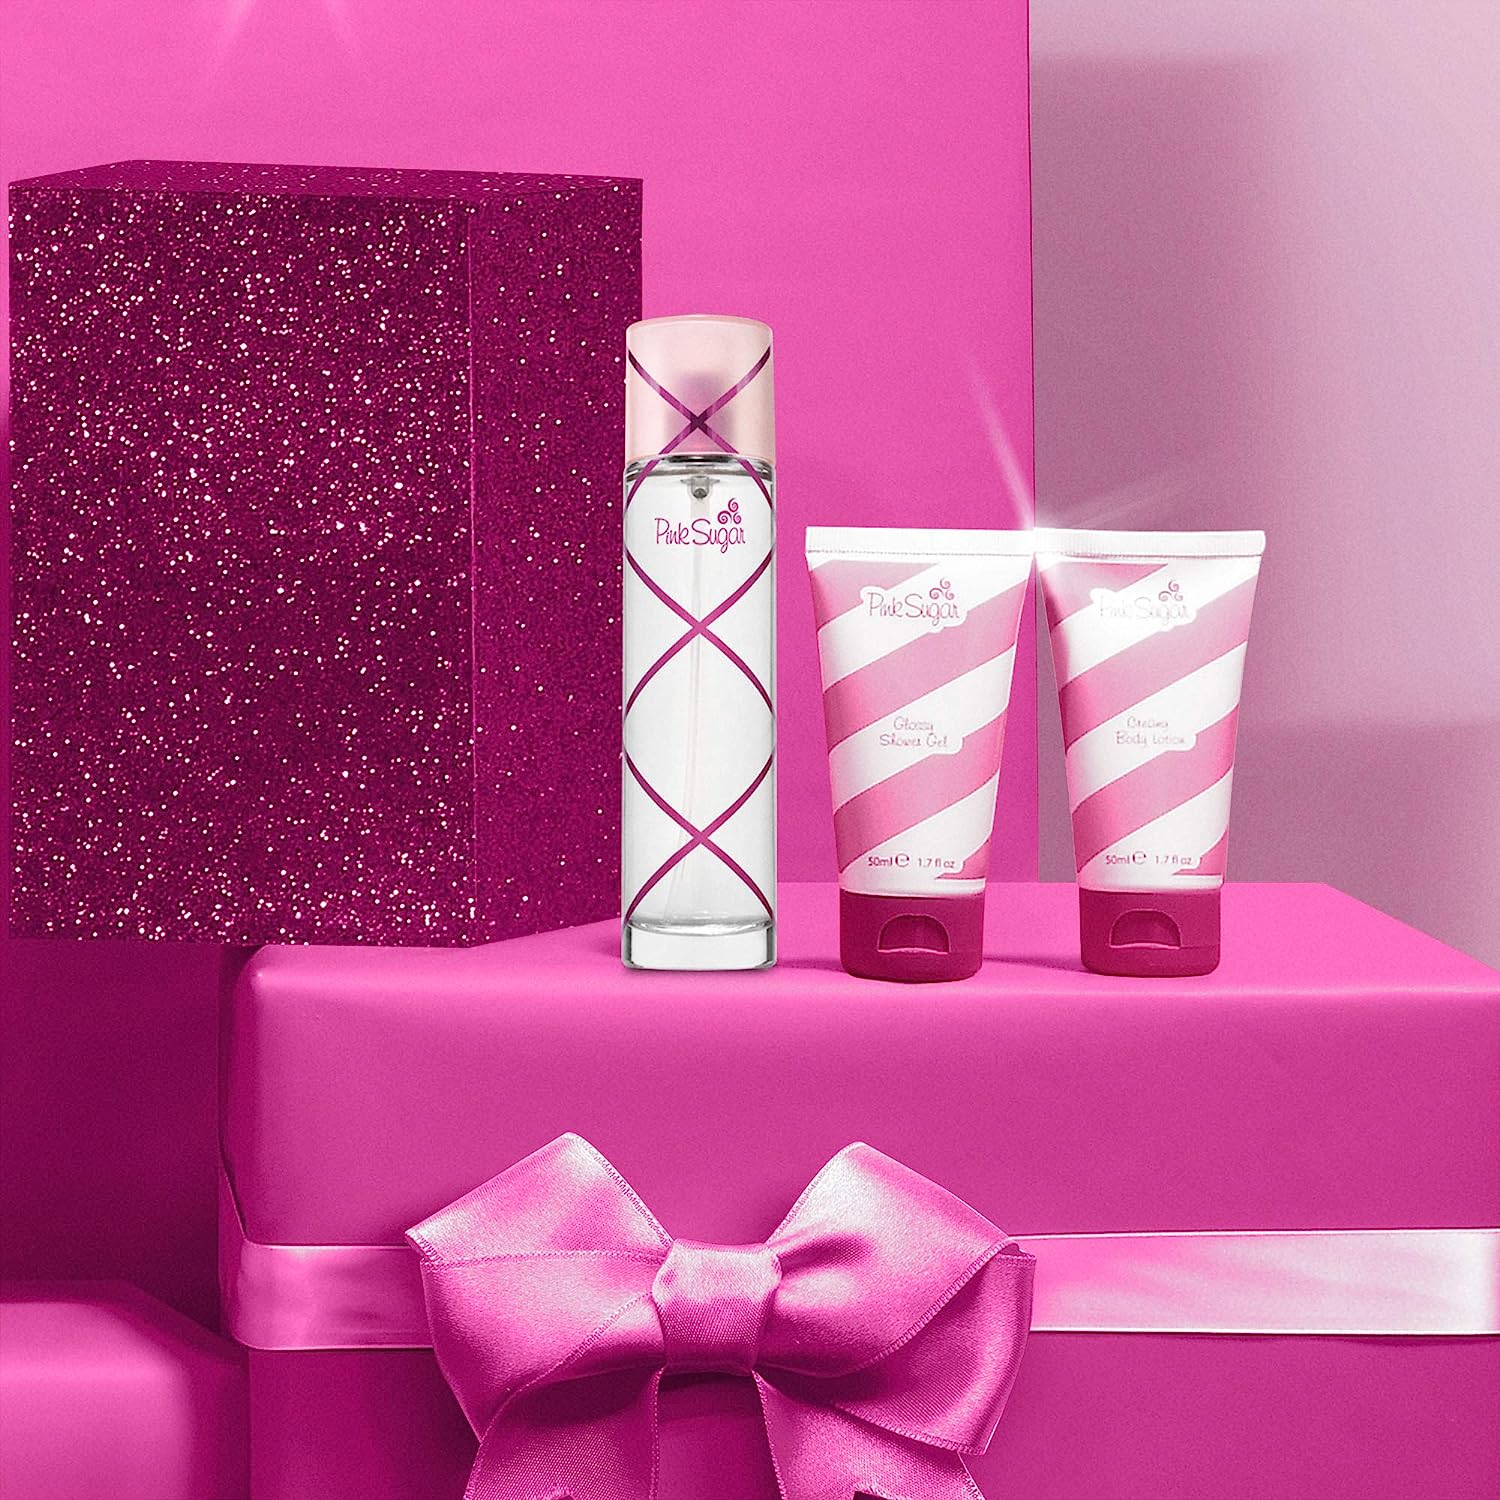 Aquolina Pink Sugar Sweet Addiction EDT Body Lotion Set | My Perfume Shop Australia